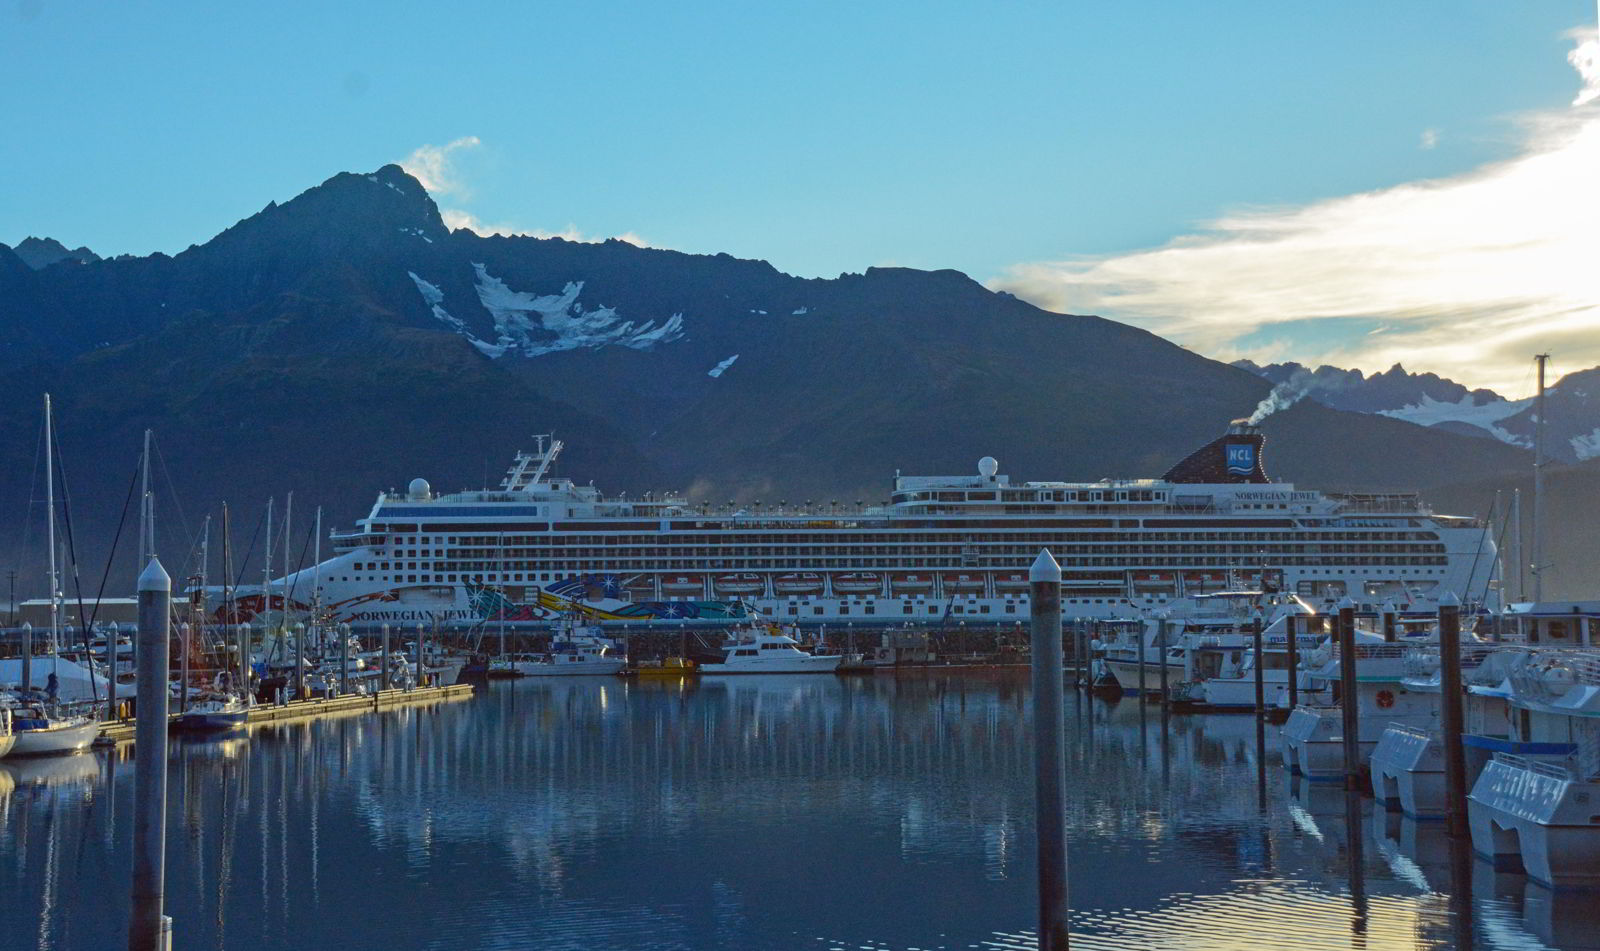 An image of the Norwegian Jewel cruise ship in port at Seward, Alaska USA